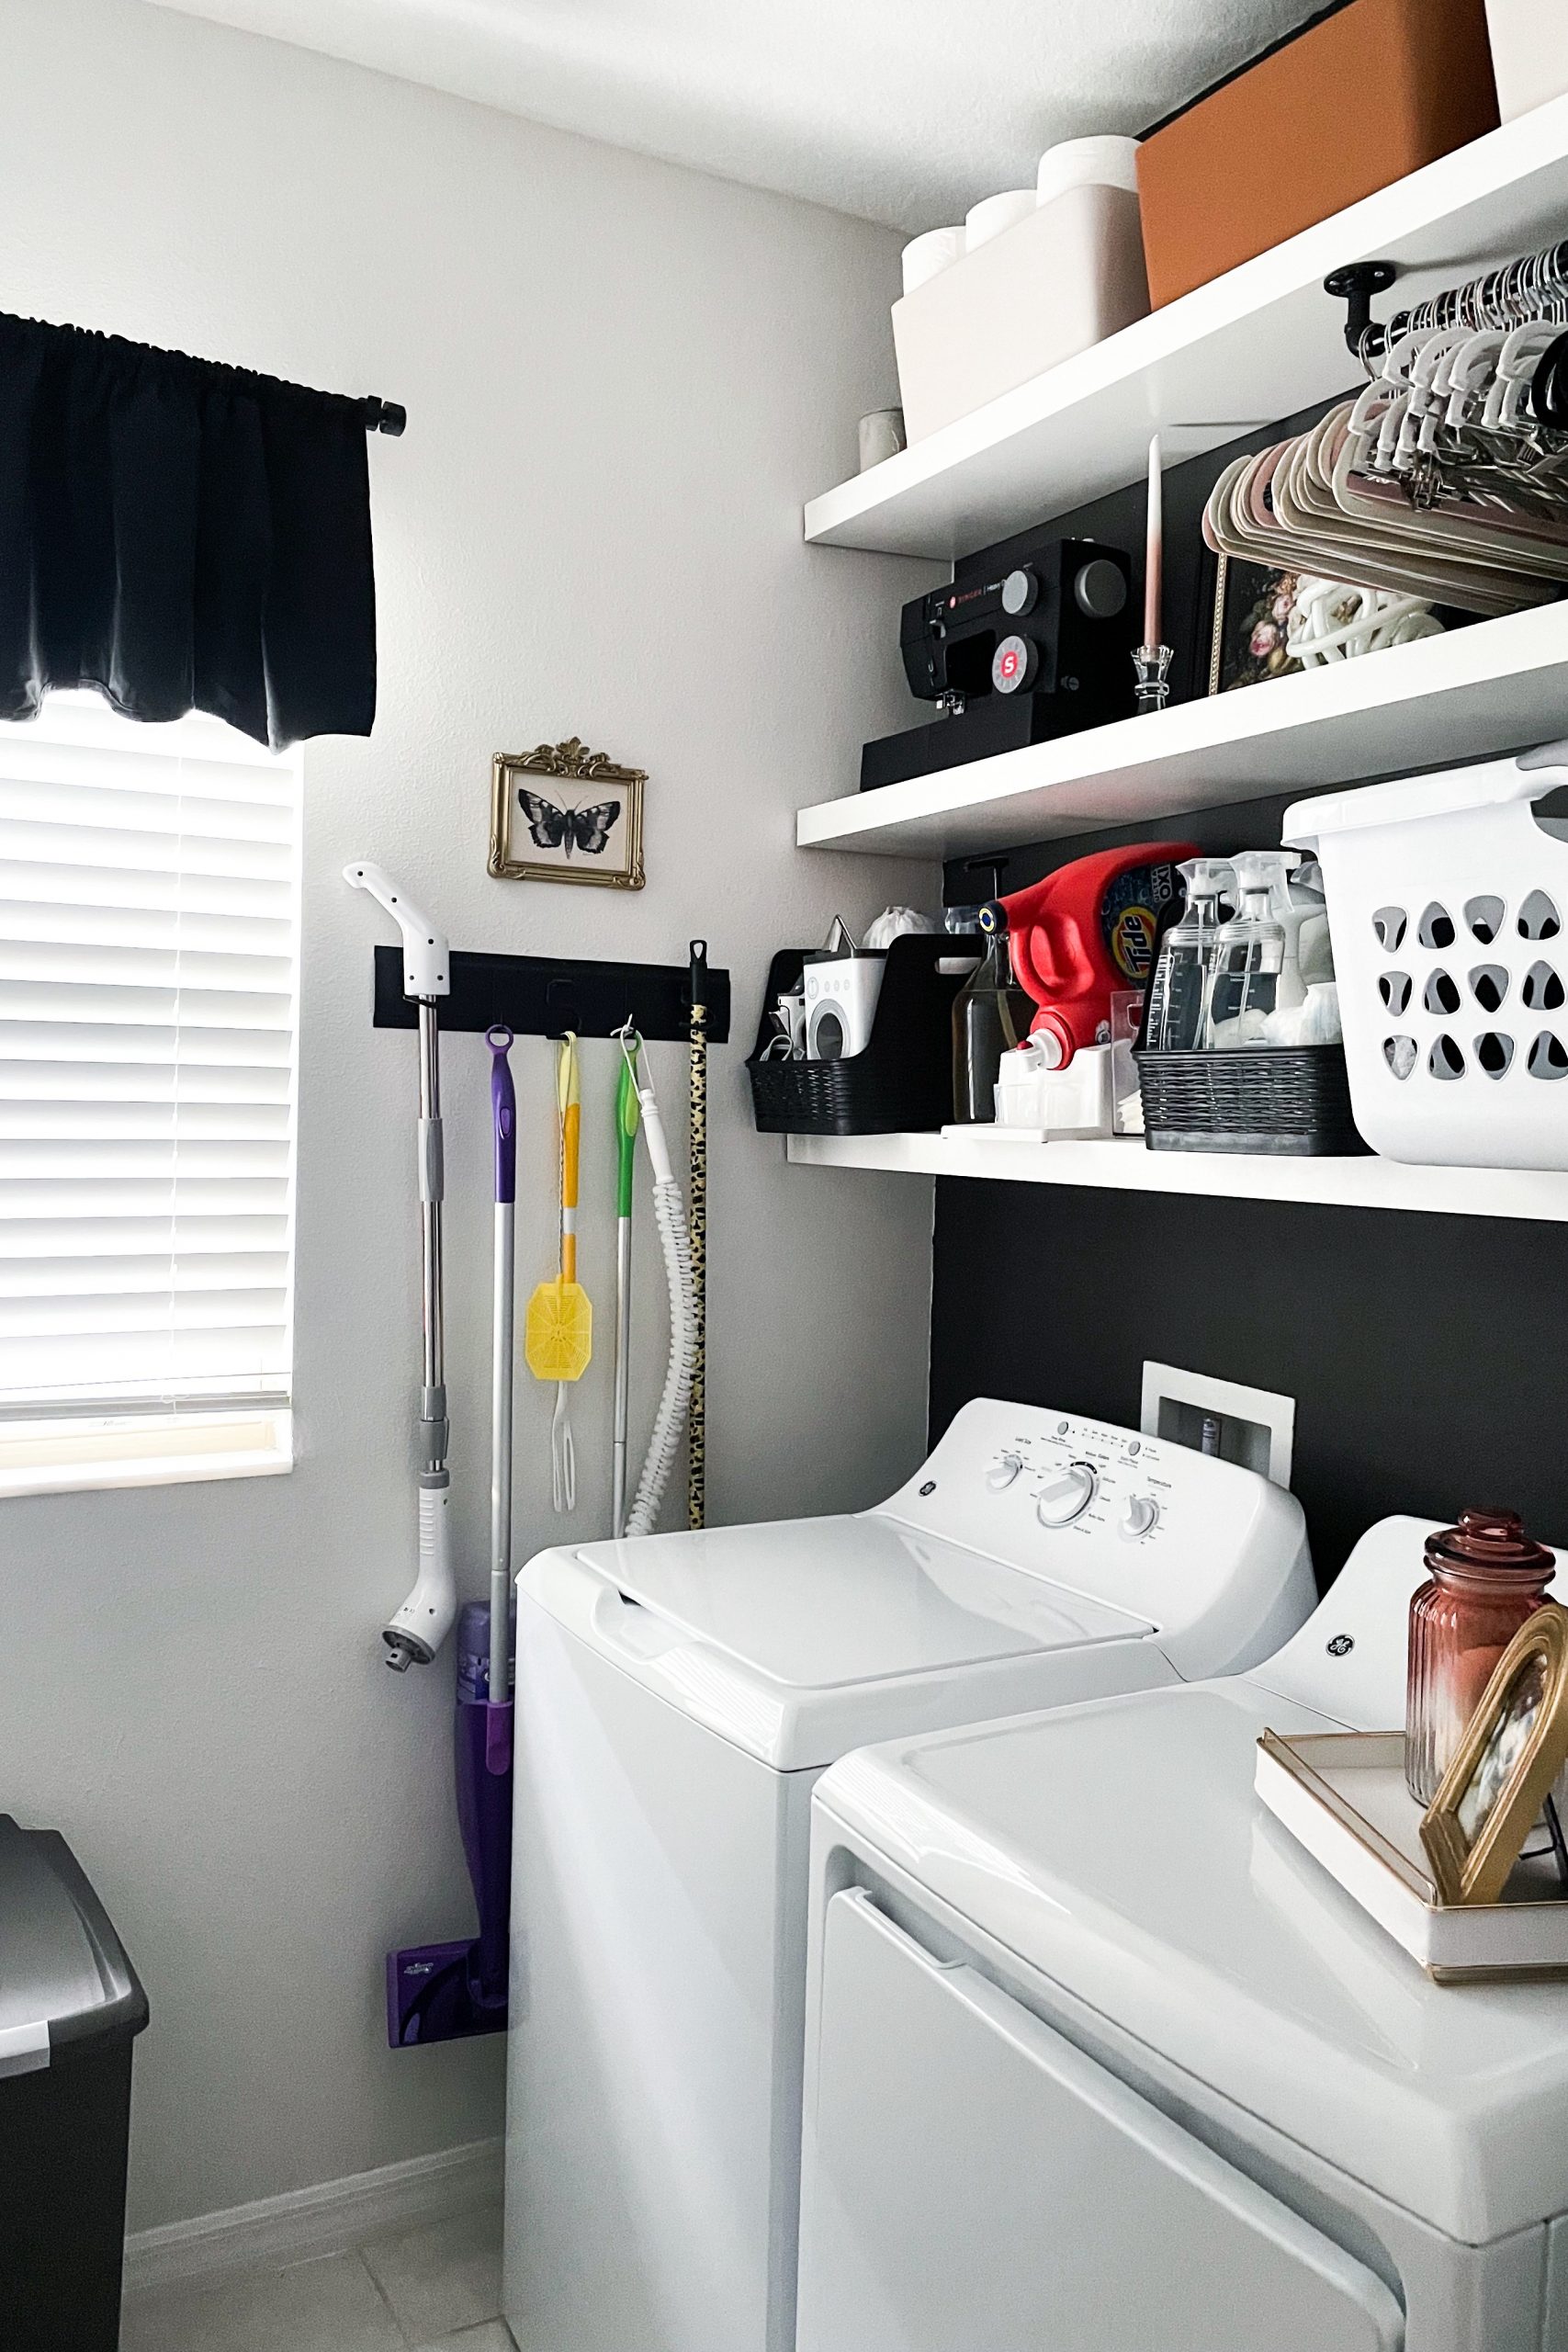 Super Easy Laundry Room Update for Under $300